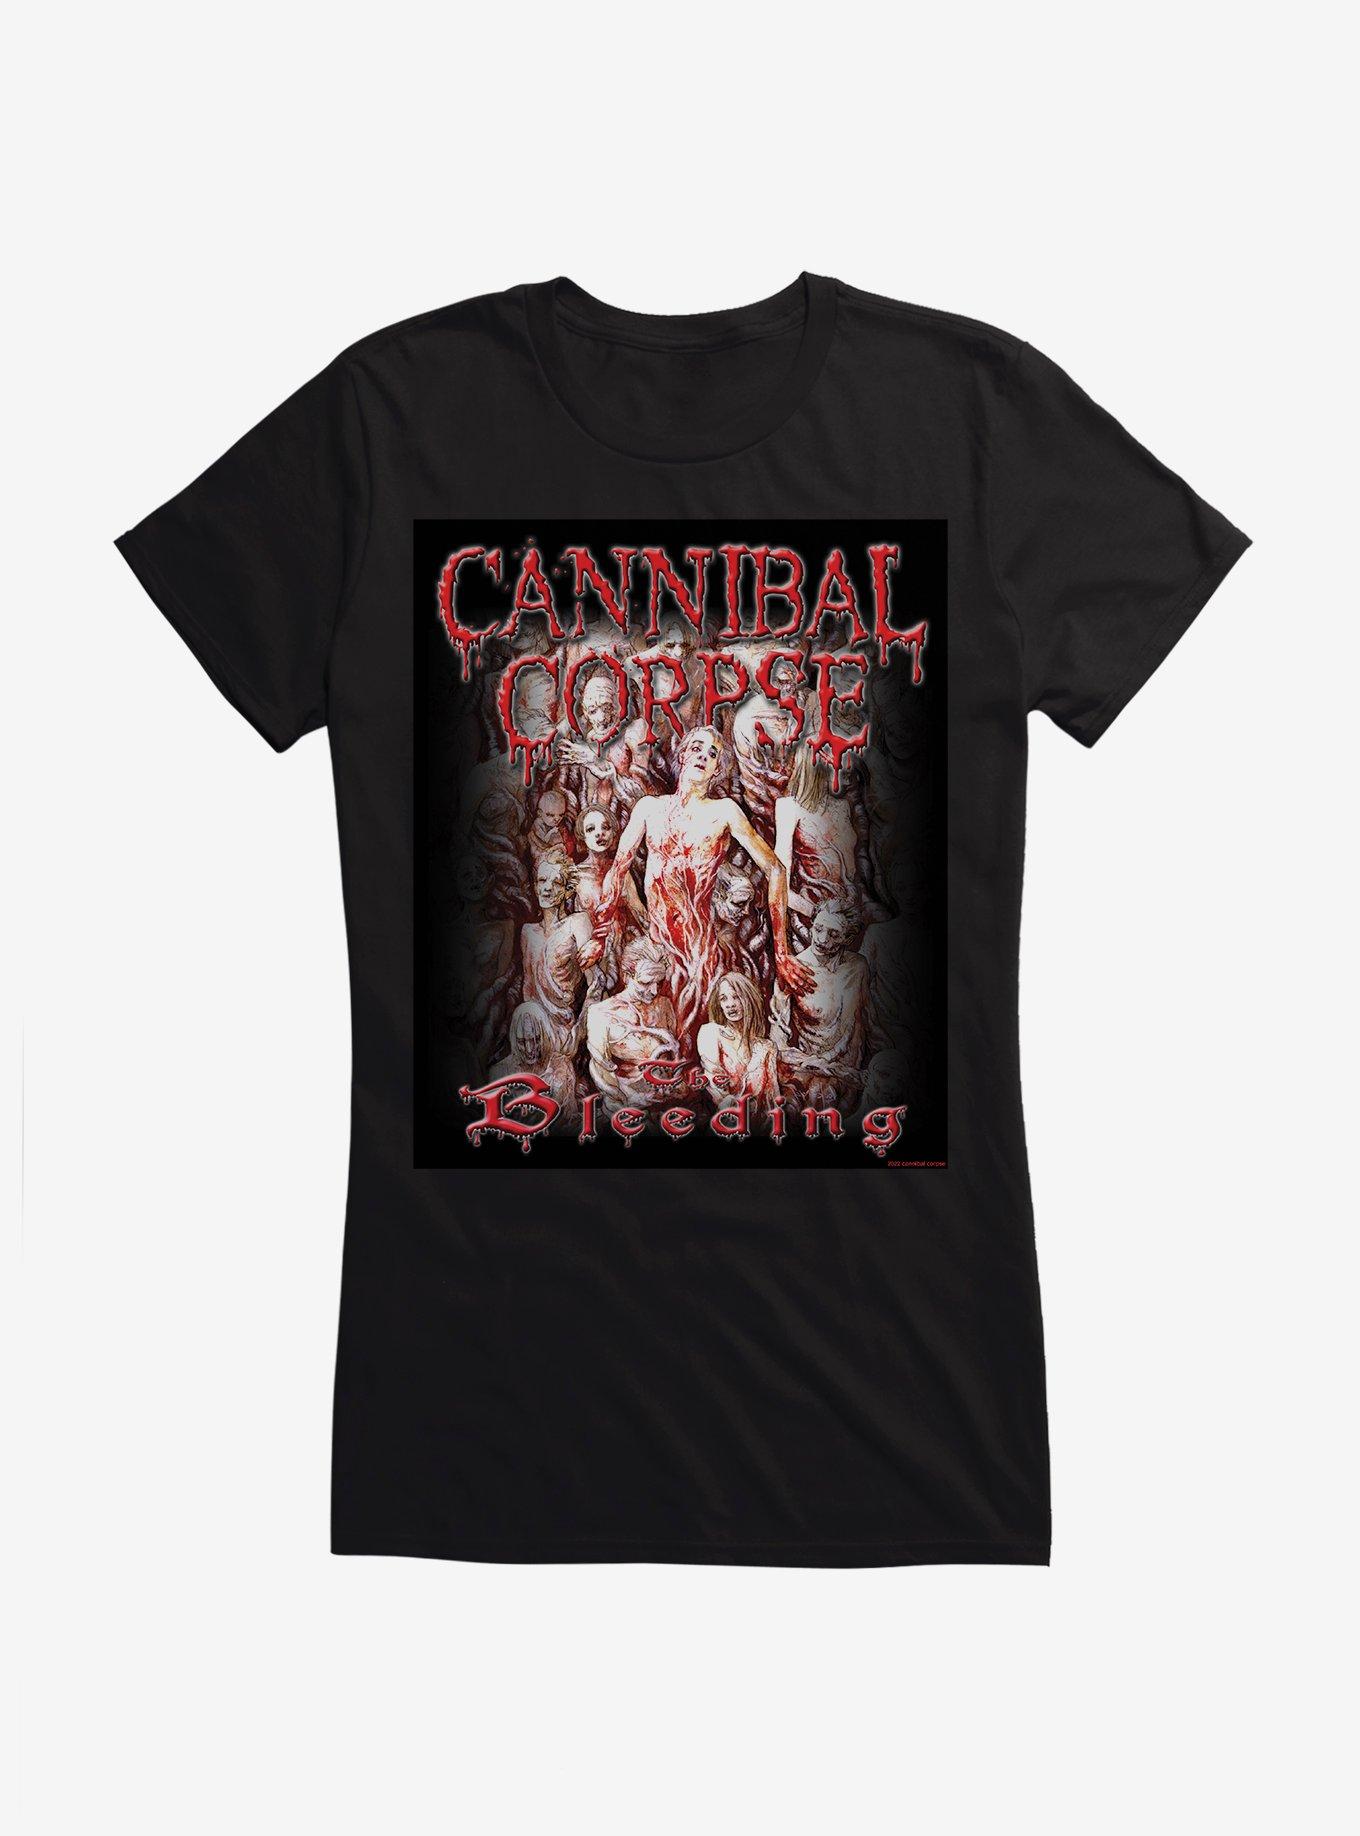 Cannibal Corpse The Bleeding Girls T-Shirt